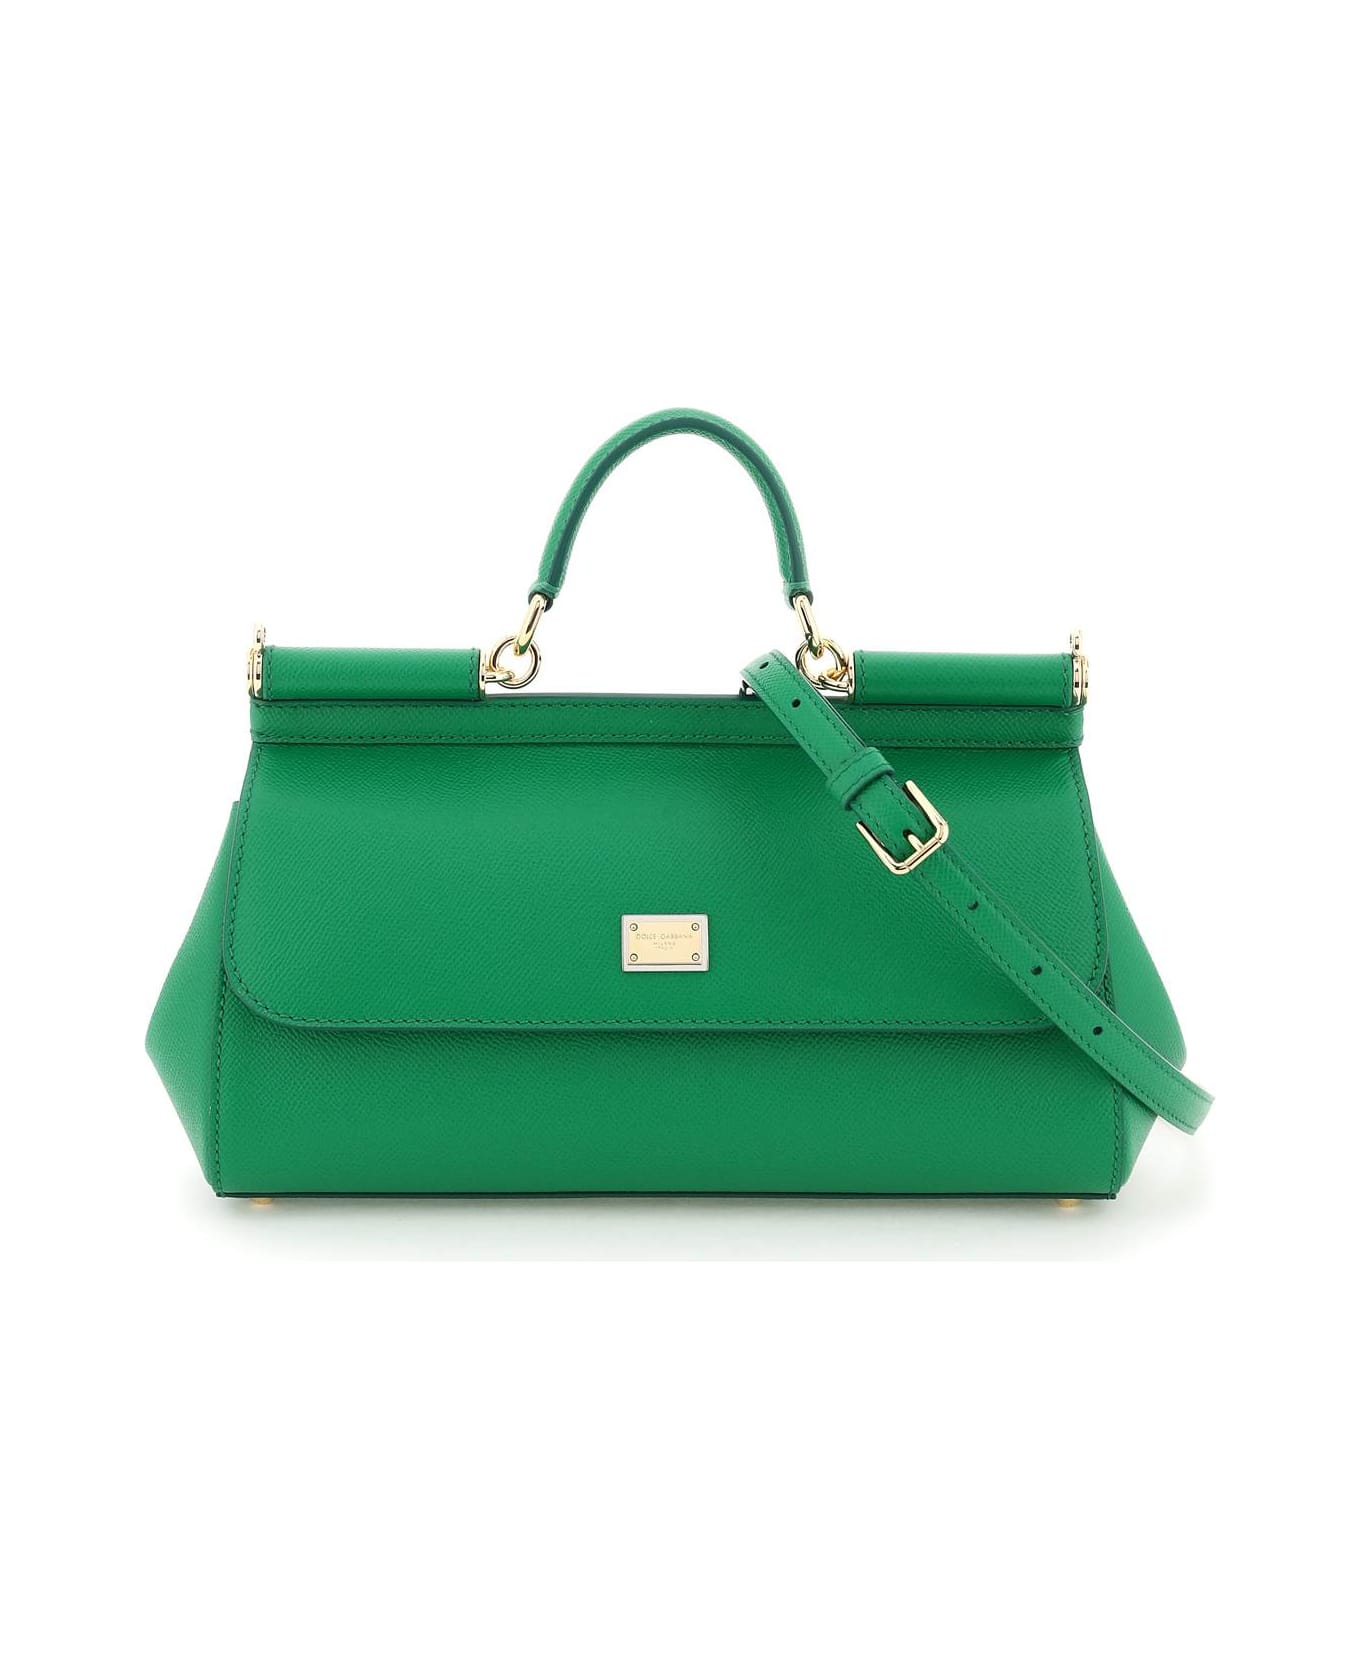 Dolce & Gabbana Sicily Handbag - green トートバッグ